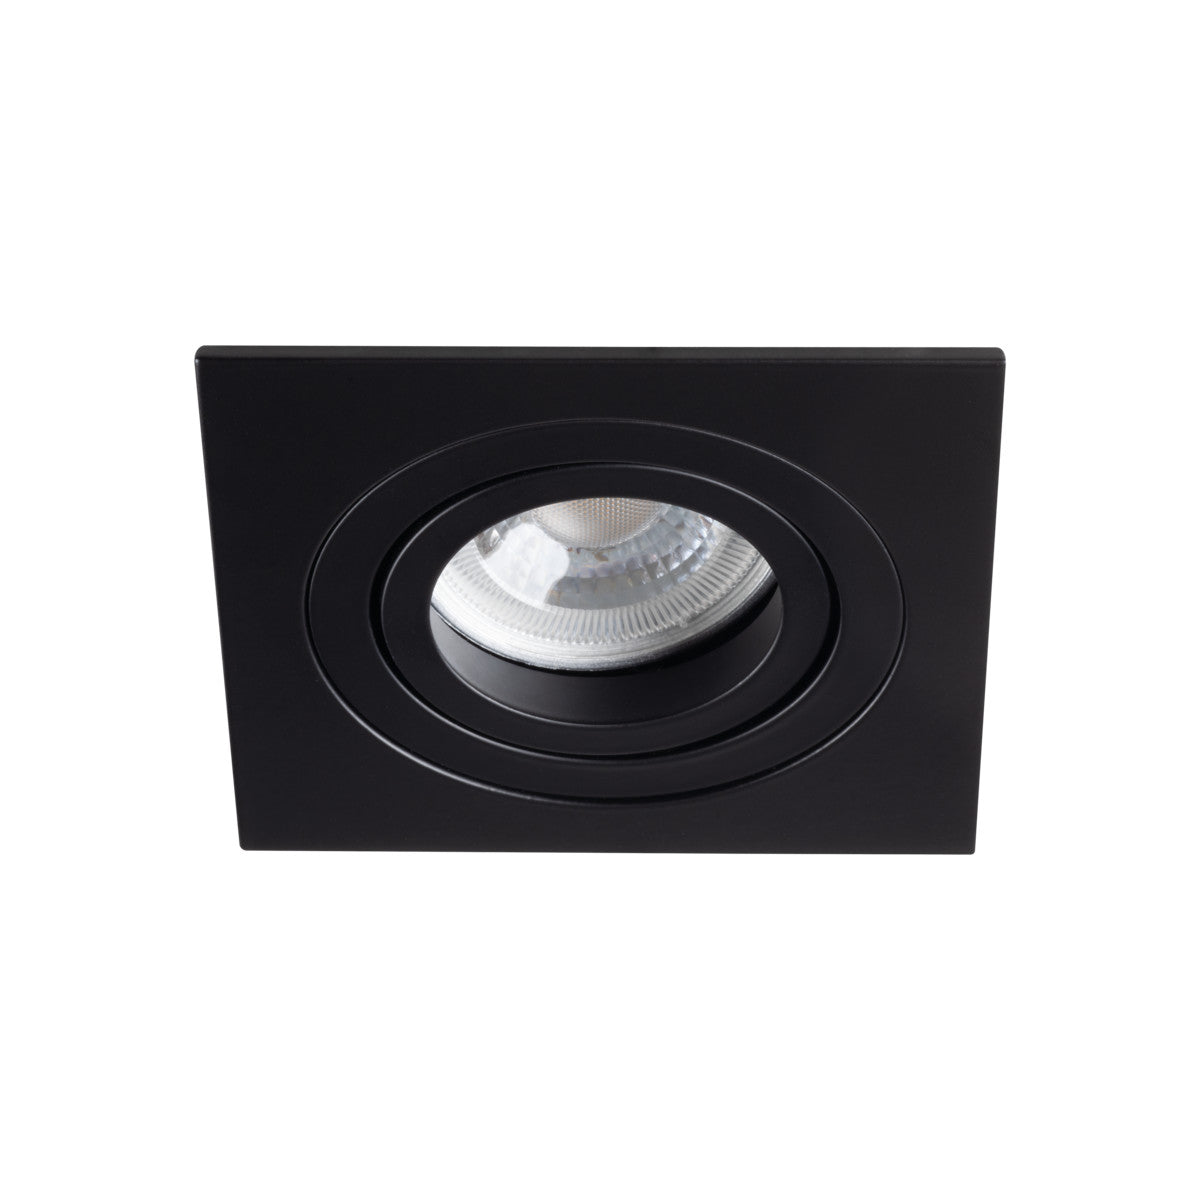 Kanlux SEIDY GU10 Ceiling Recessed Spot Light Fitting Black / White Colour Option